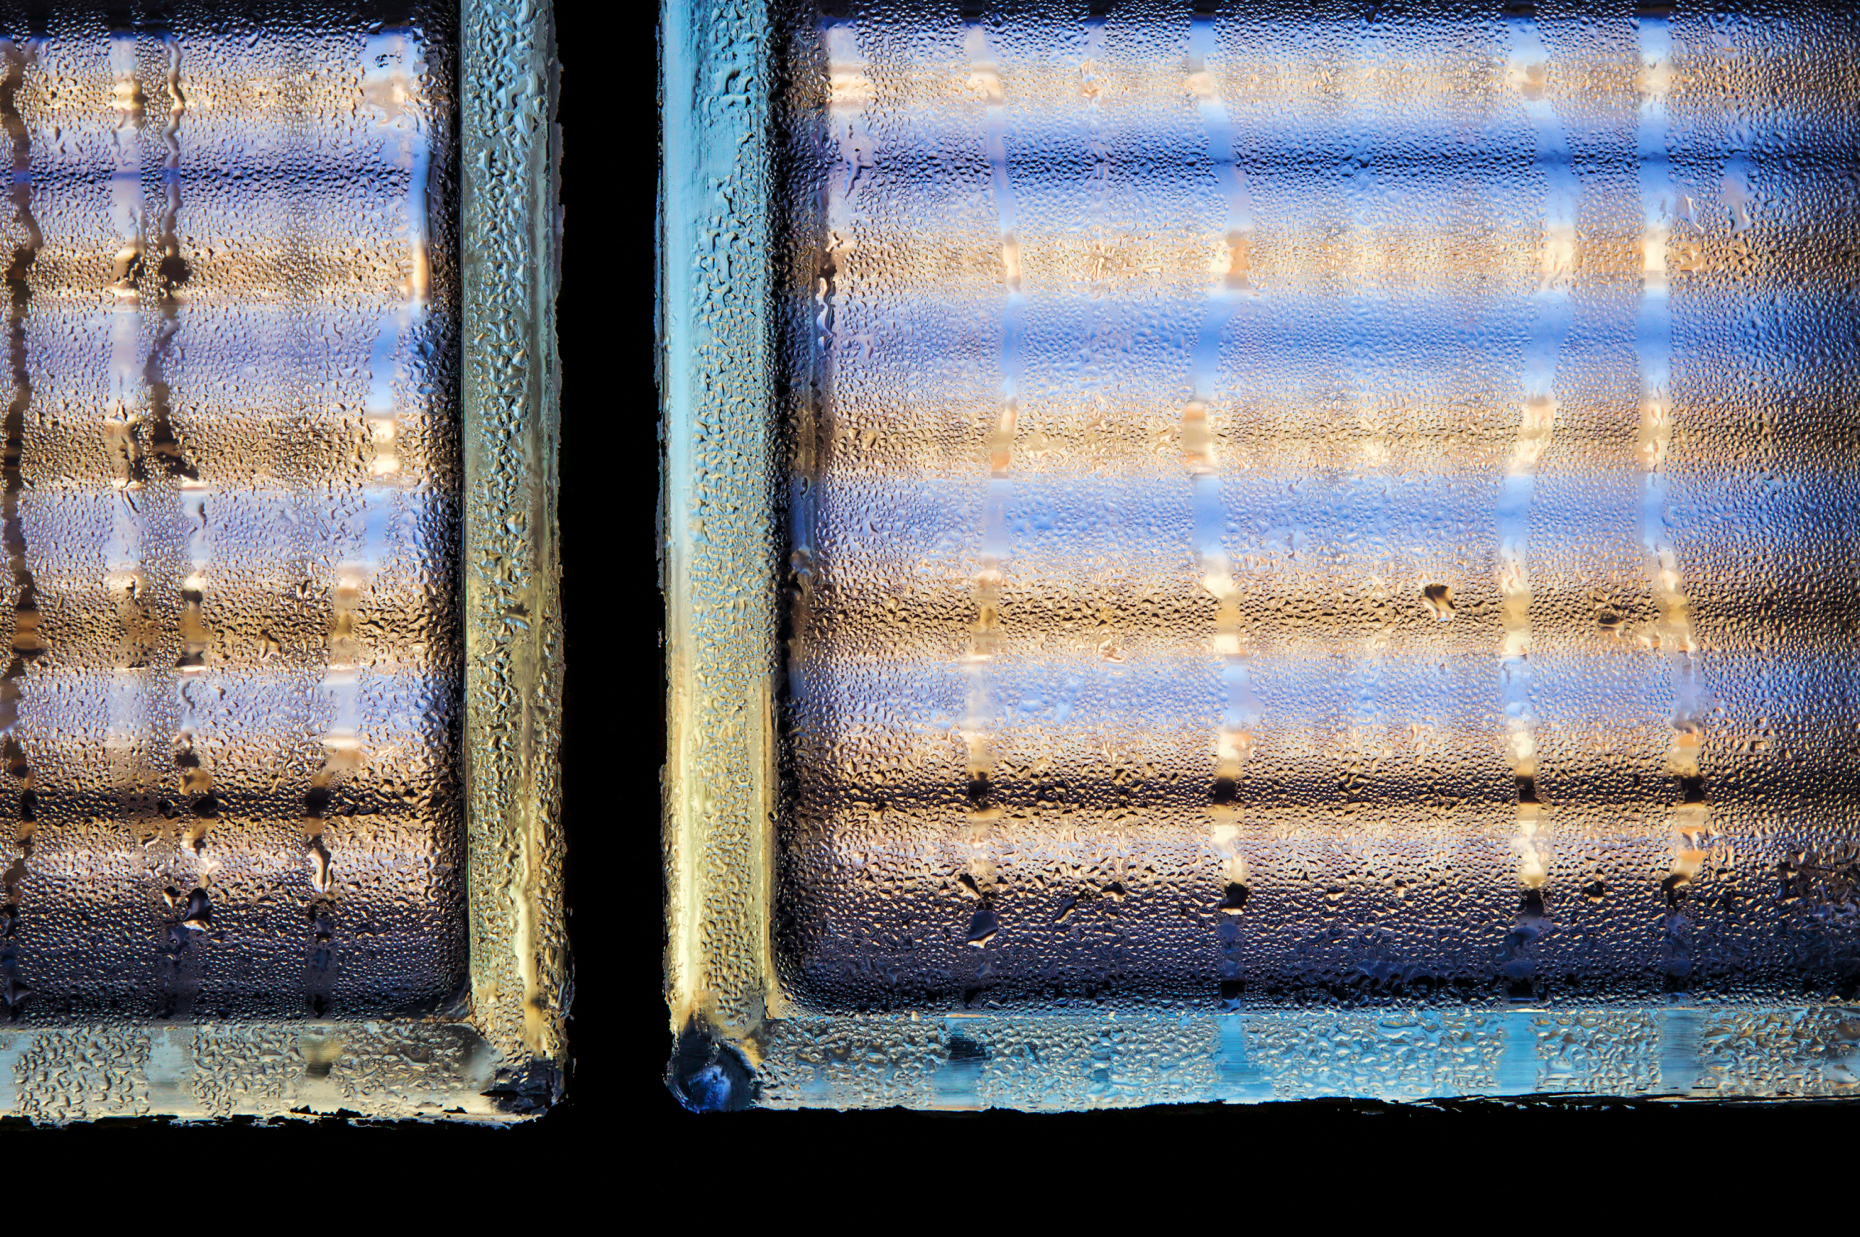 Condensation on a glass block window creates an interesting pattern